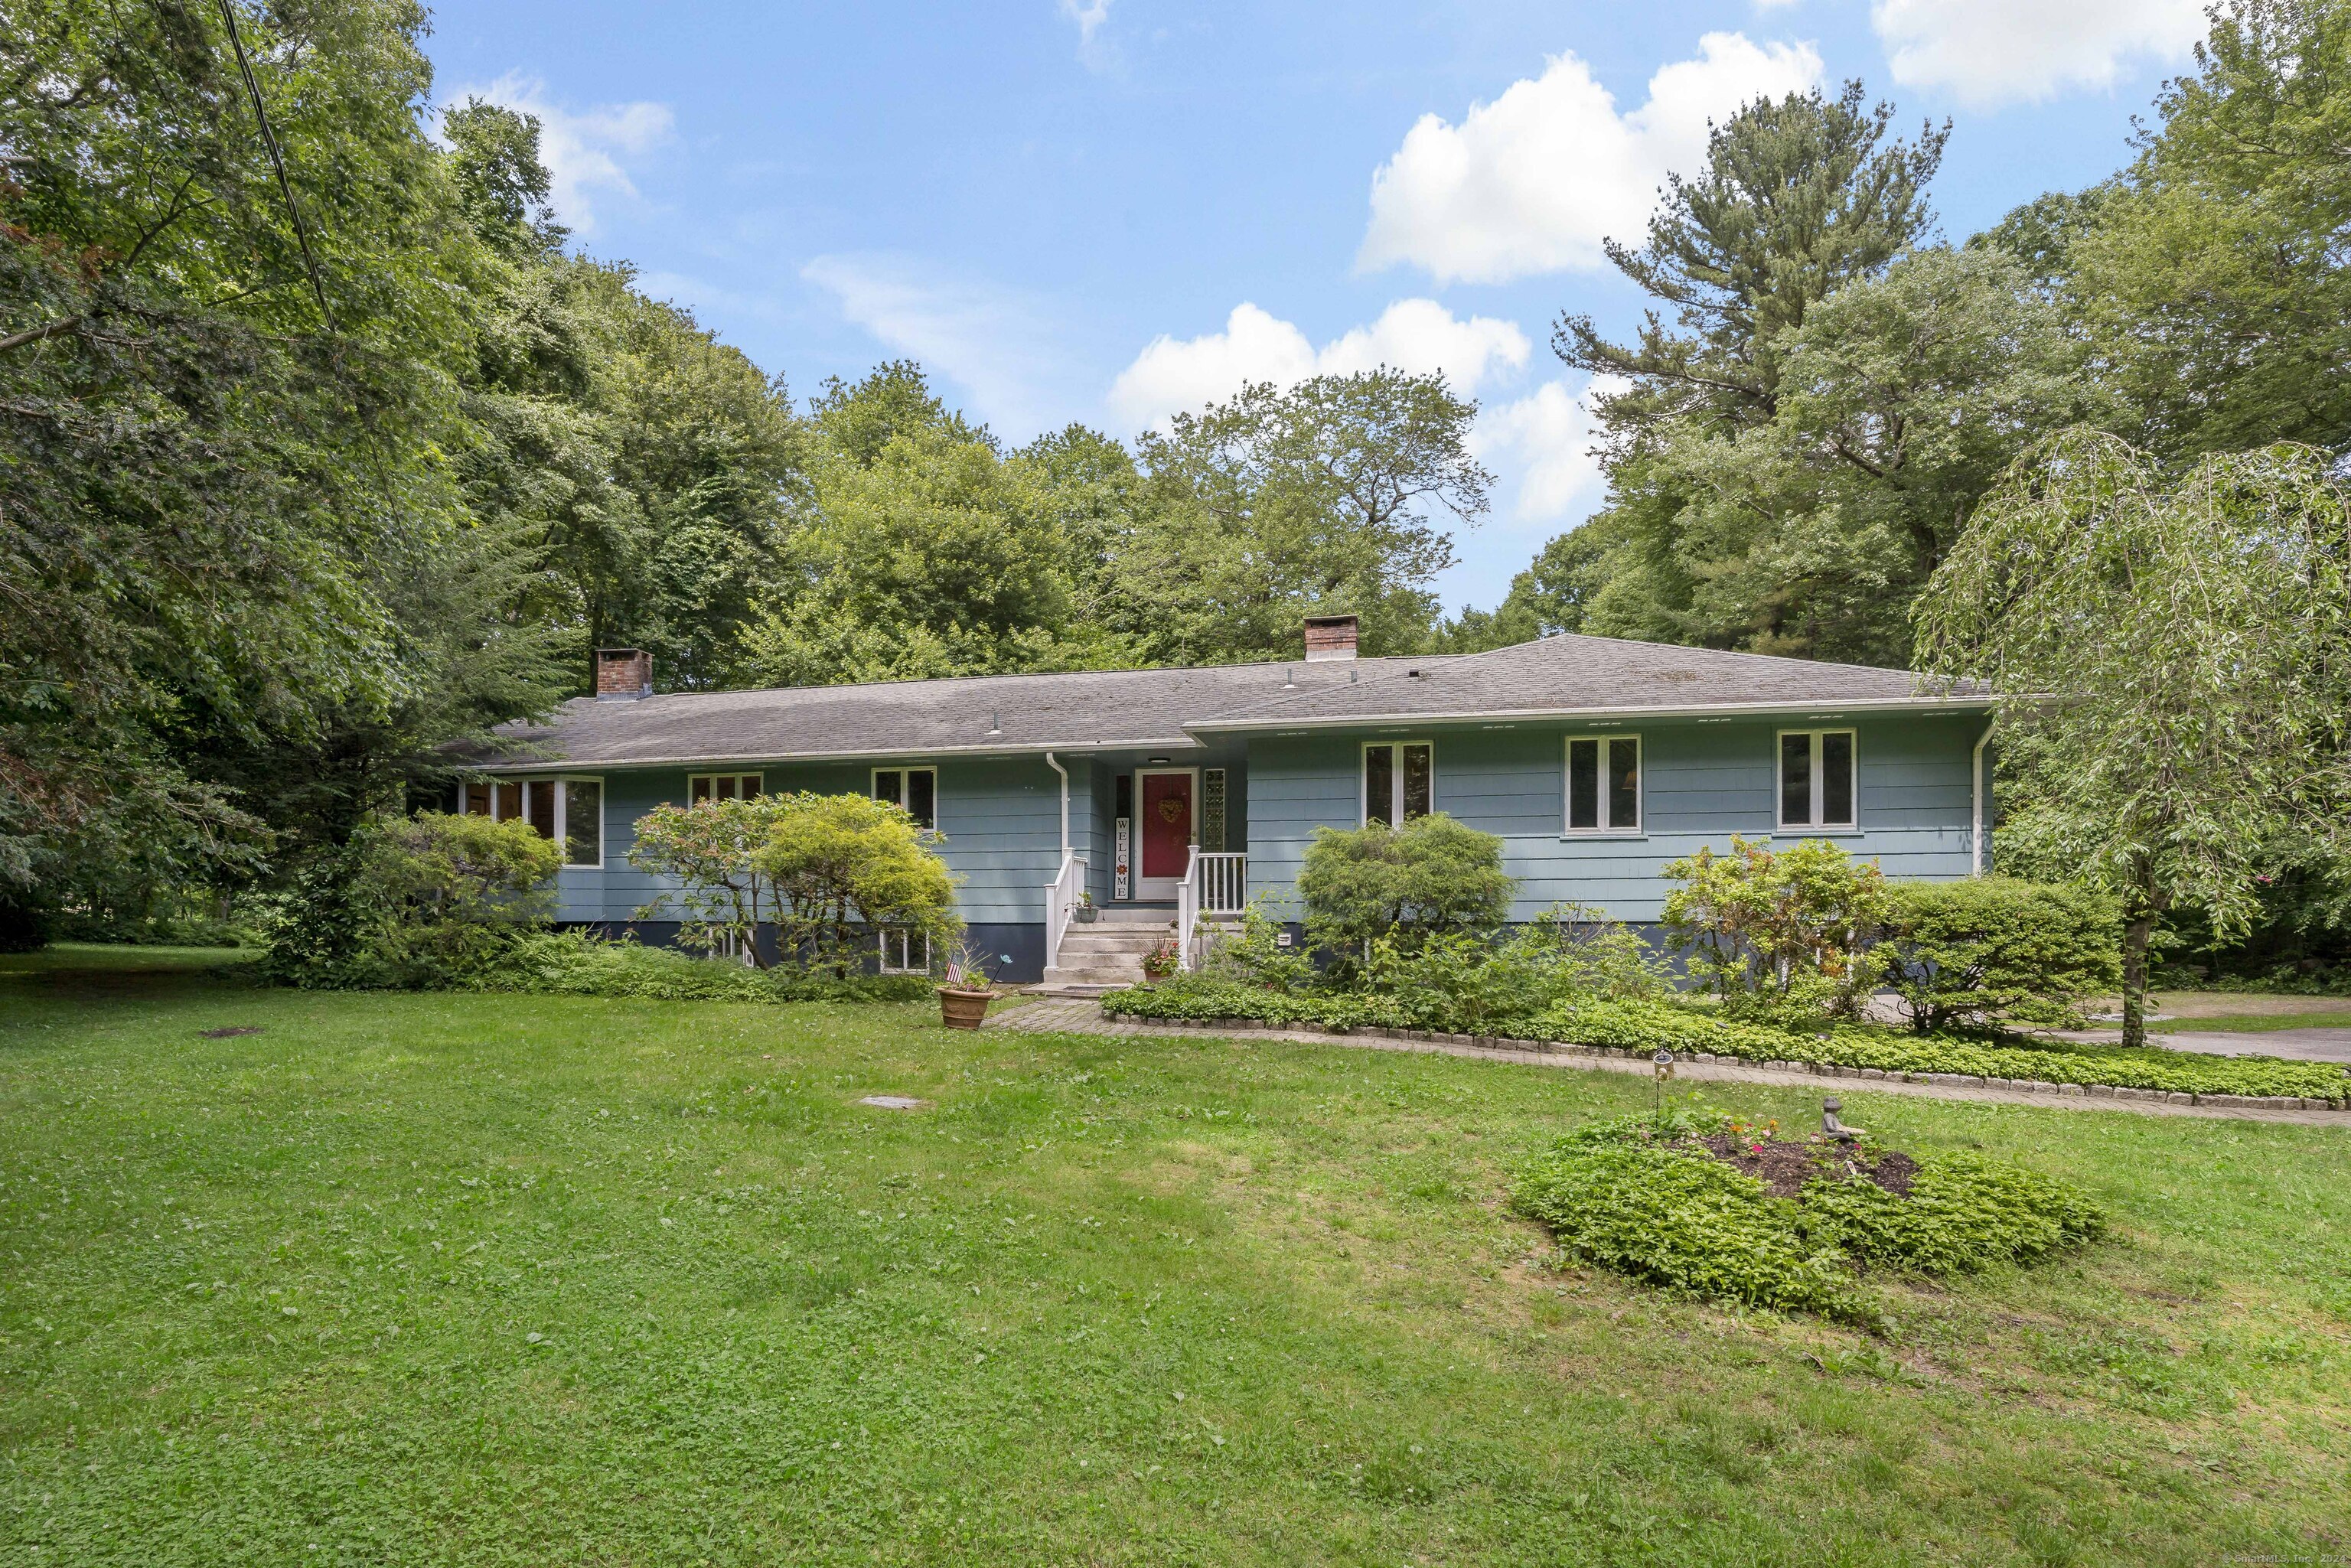 Property for Sale at 91 Northrop Road, Woodbridge, Connecticut - Bedrooms: 4 
Bathrooms: 3 
Rooms: 10  - $649,900